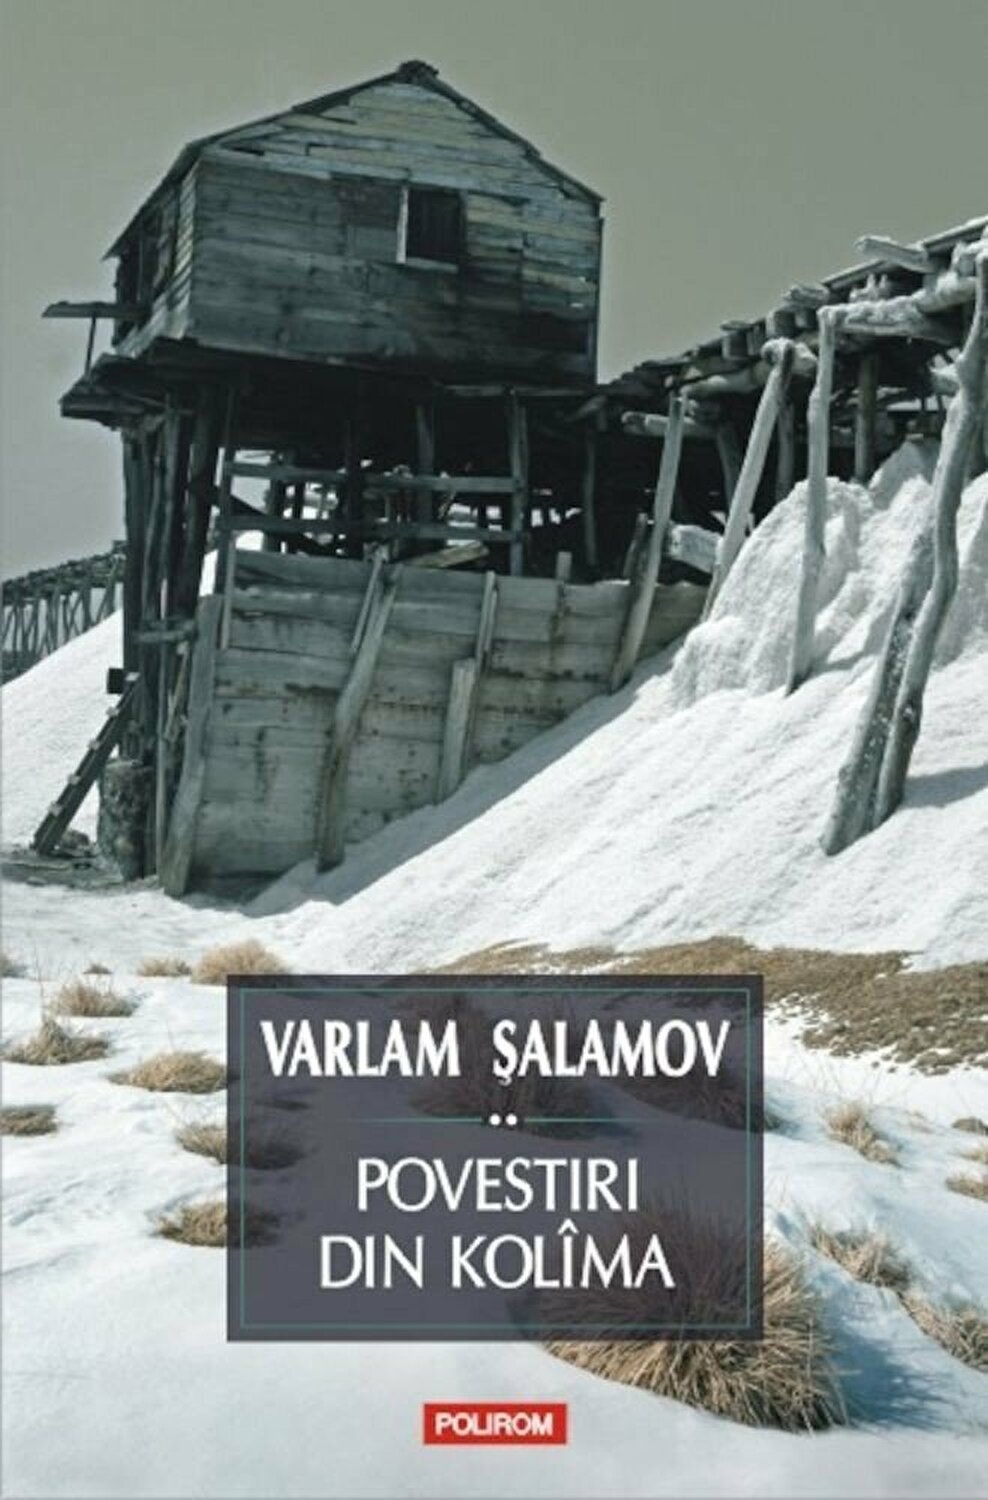 Povestiri din Kolima. Volumul II | Varlam Salamov carturesti.ro poza bestsellers.ro